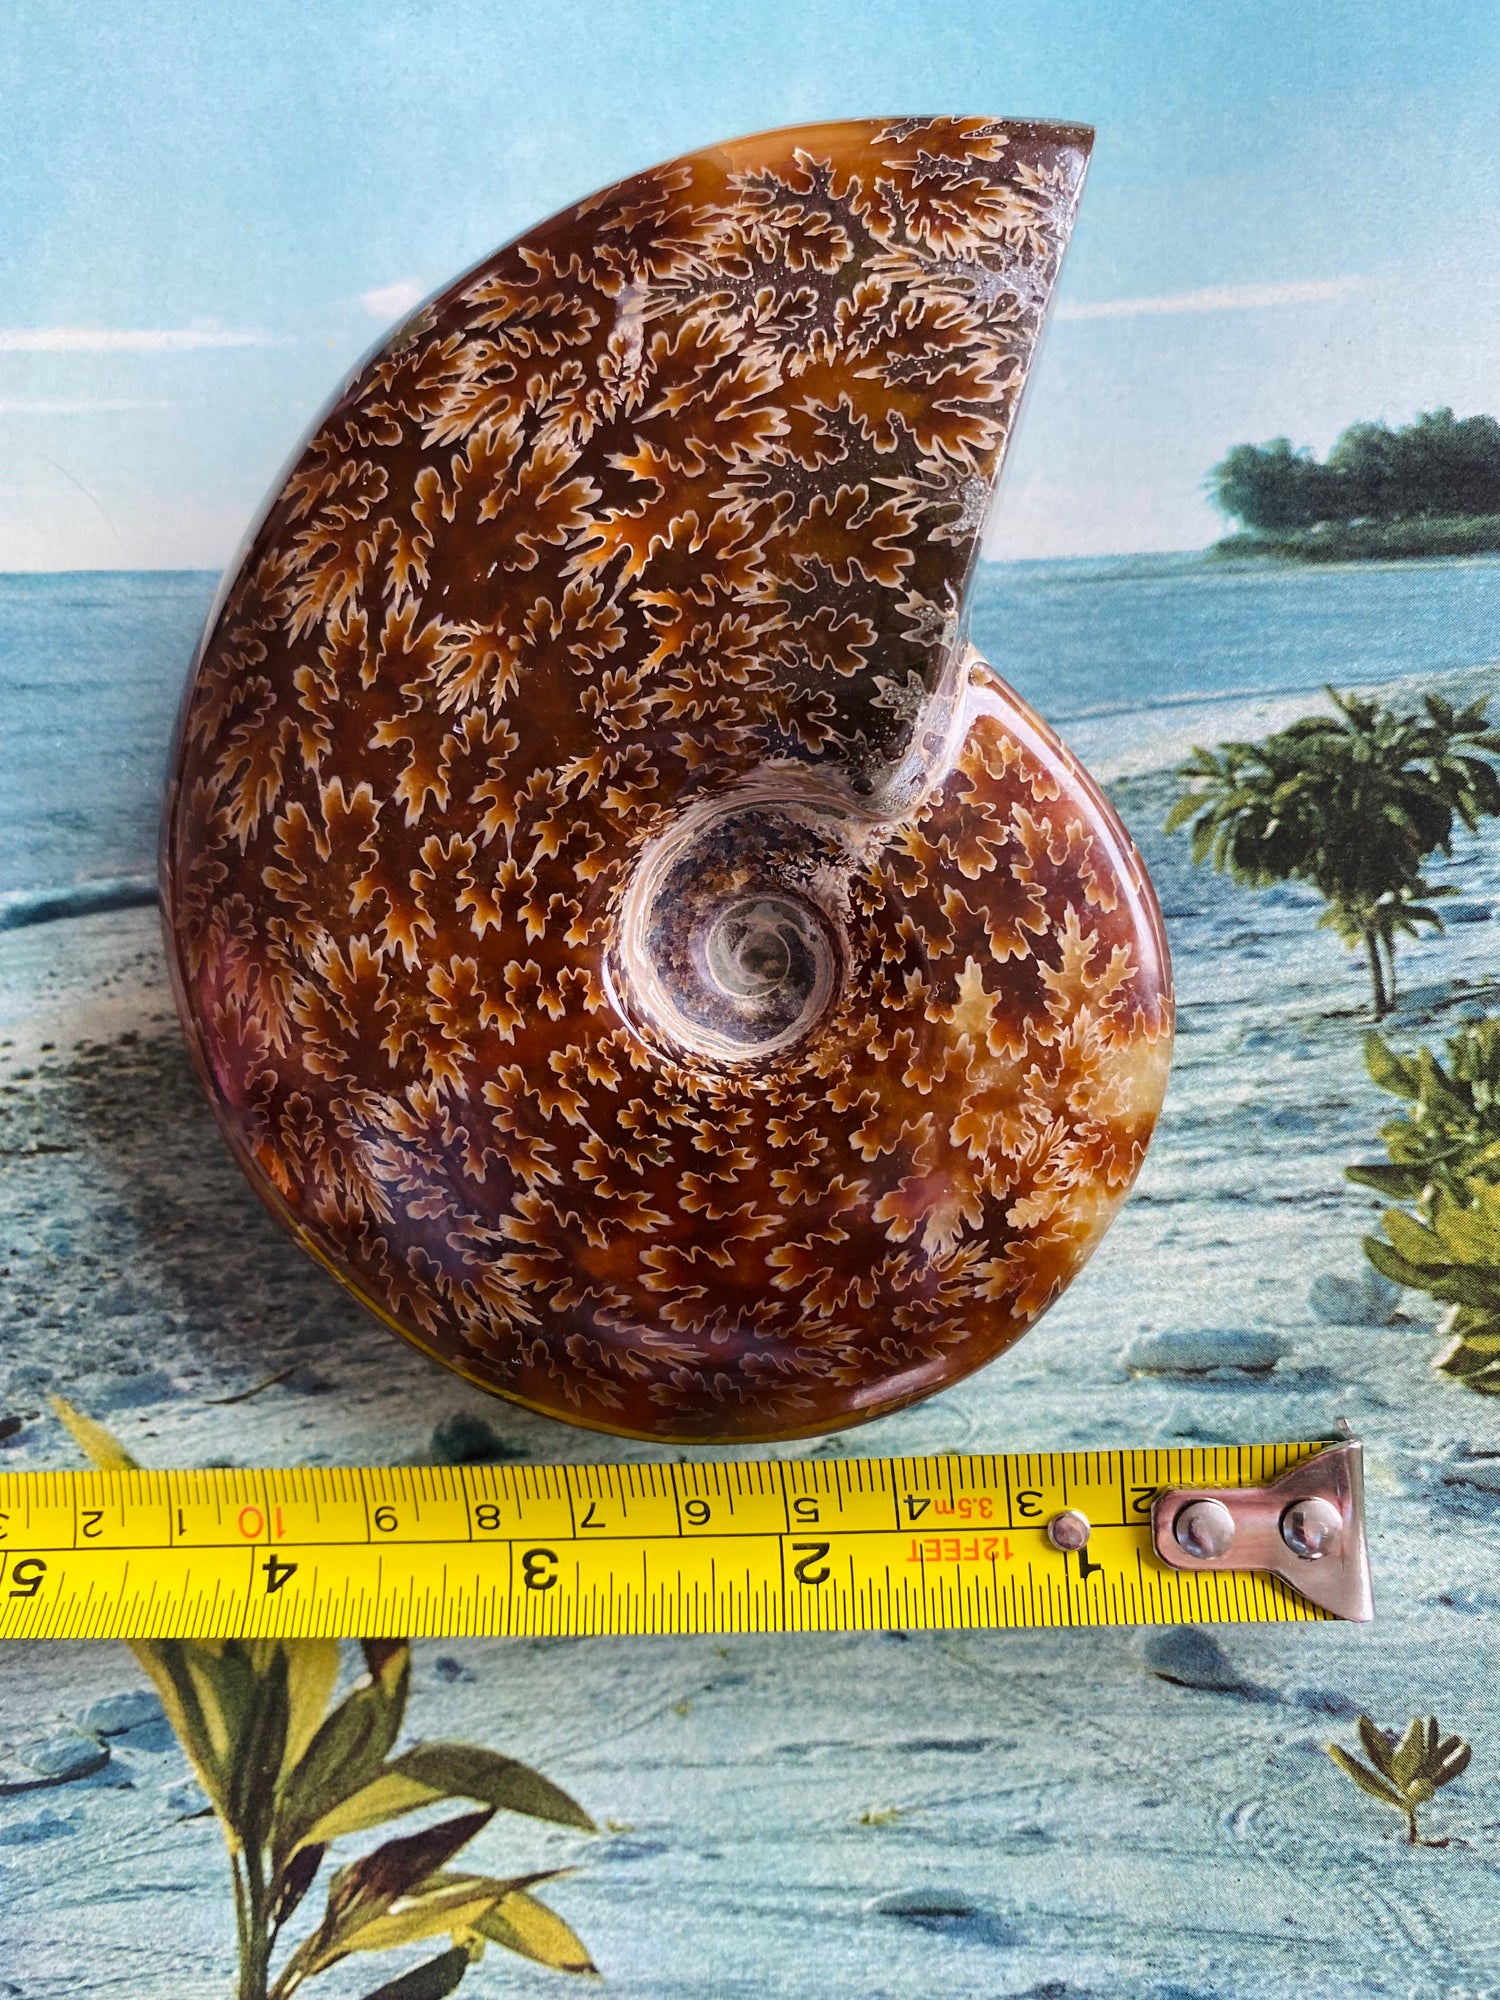 Polished Madagascar Ammonite Fossil 4.75"x4" - Moon Room Shop and Wellness